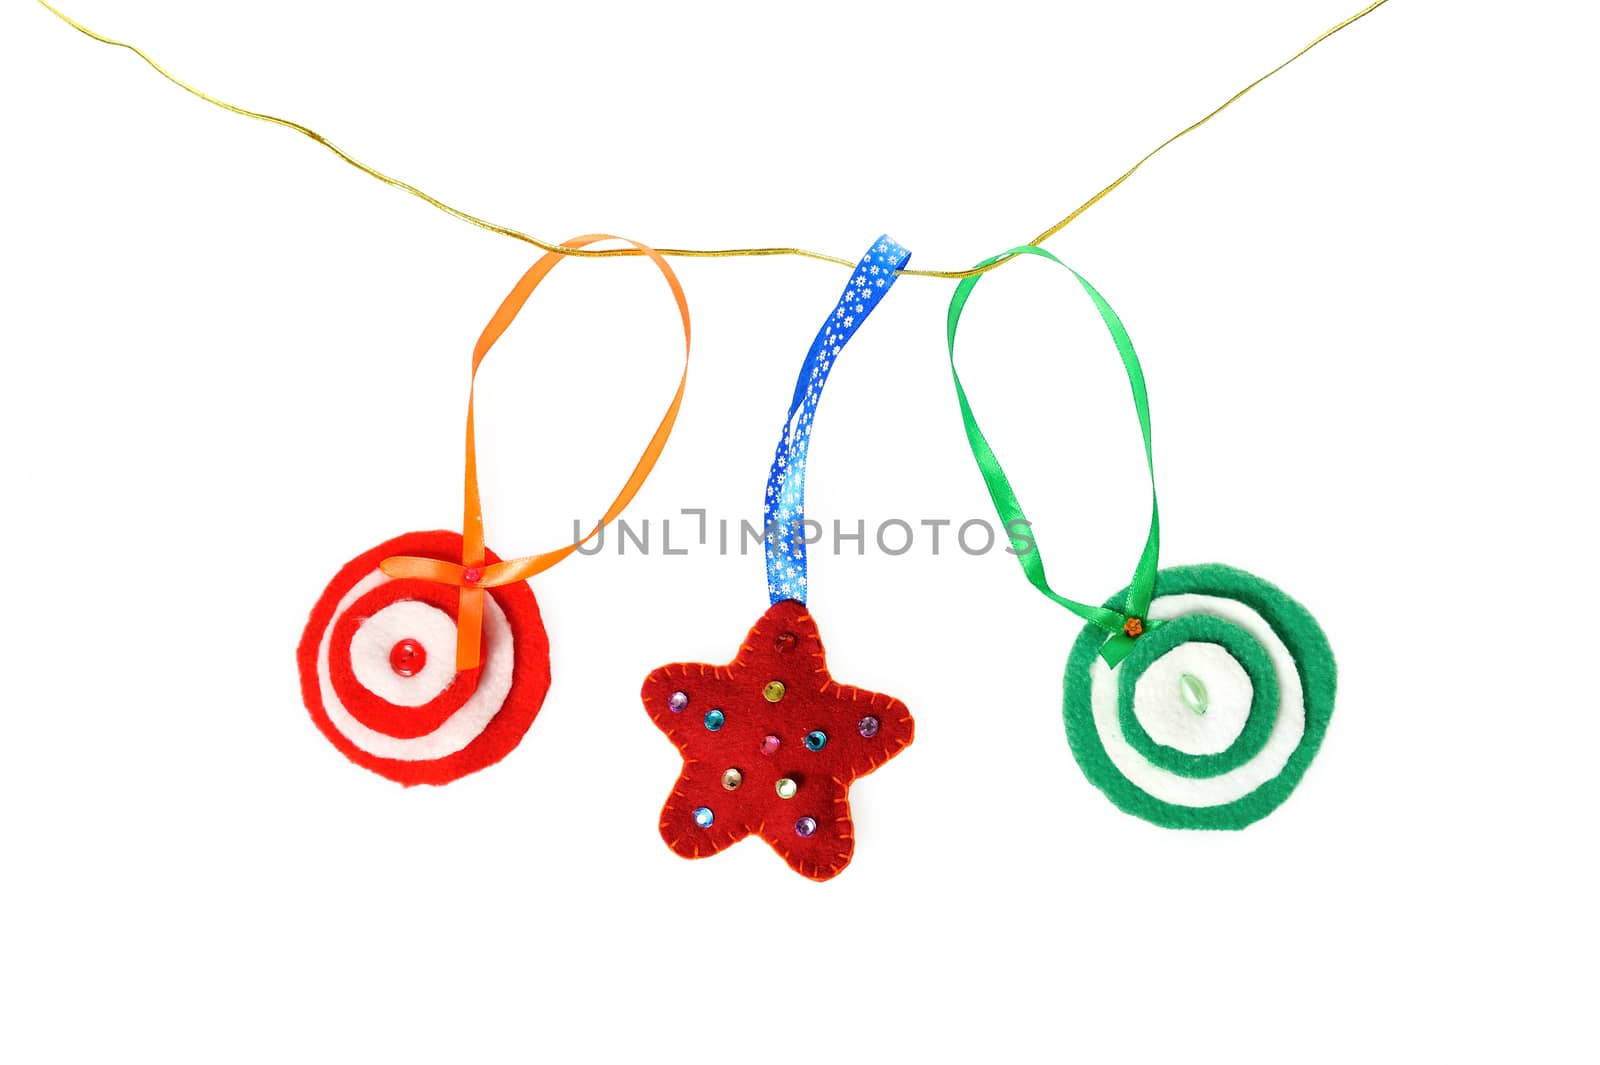 Garland of Christmas handmade toys. Handmade Christmas decorations made. of felt hanging on a rope